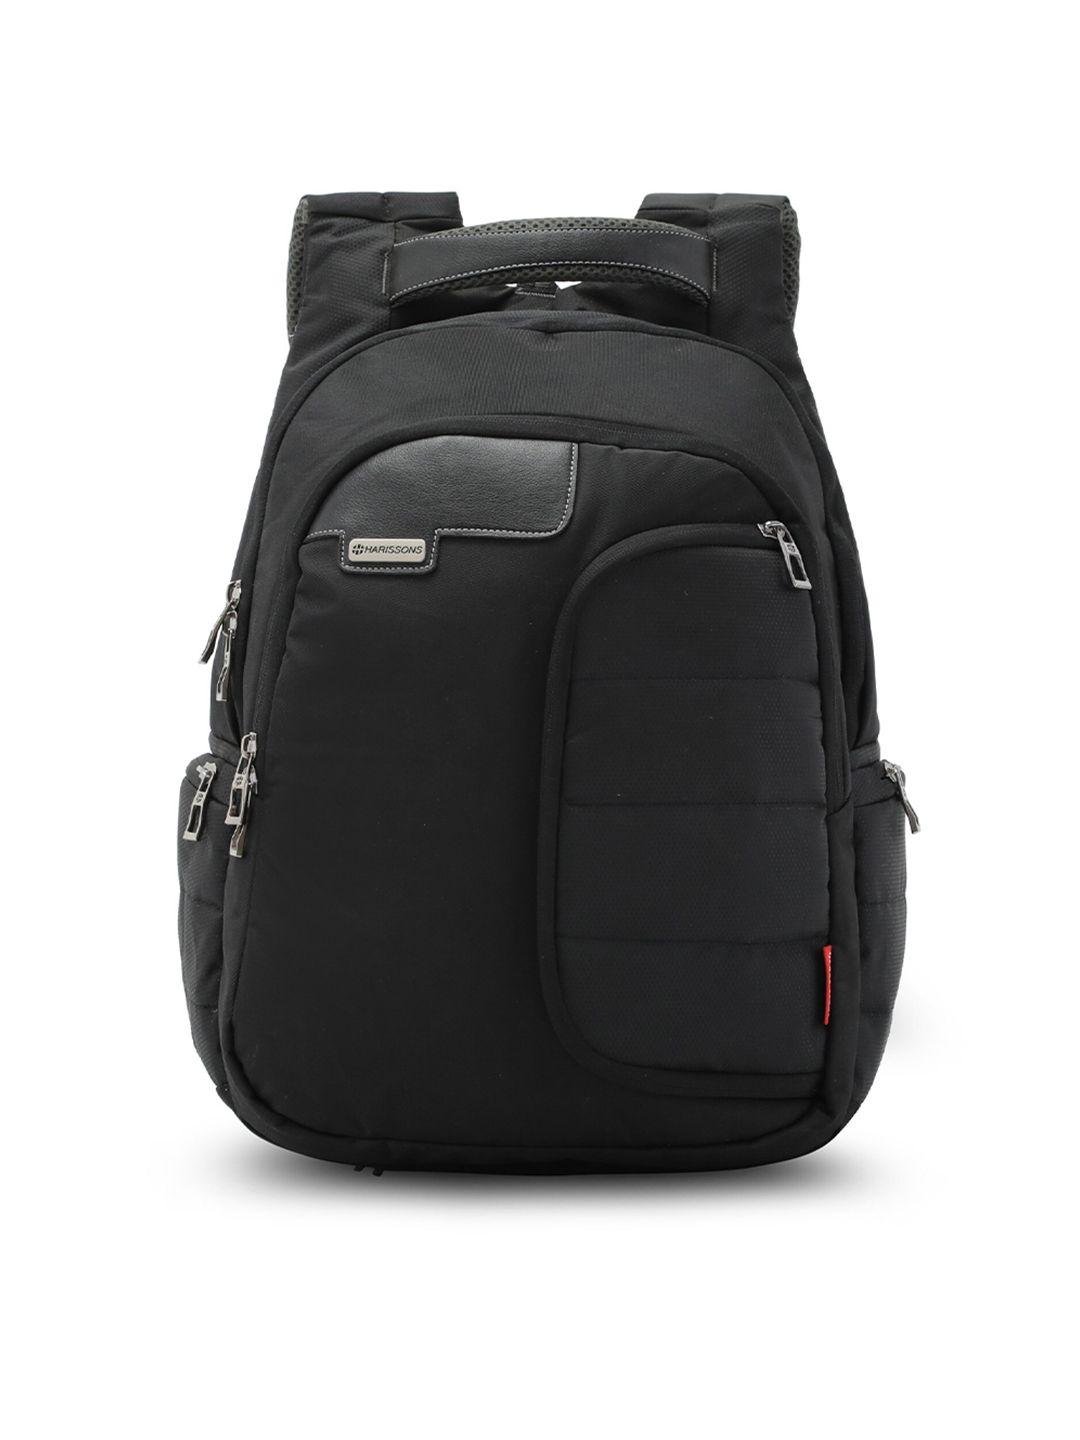 harissons unisex black laptop backpack